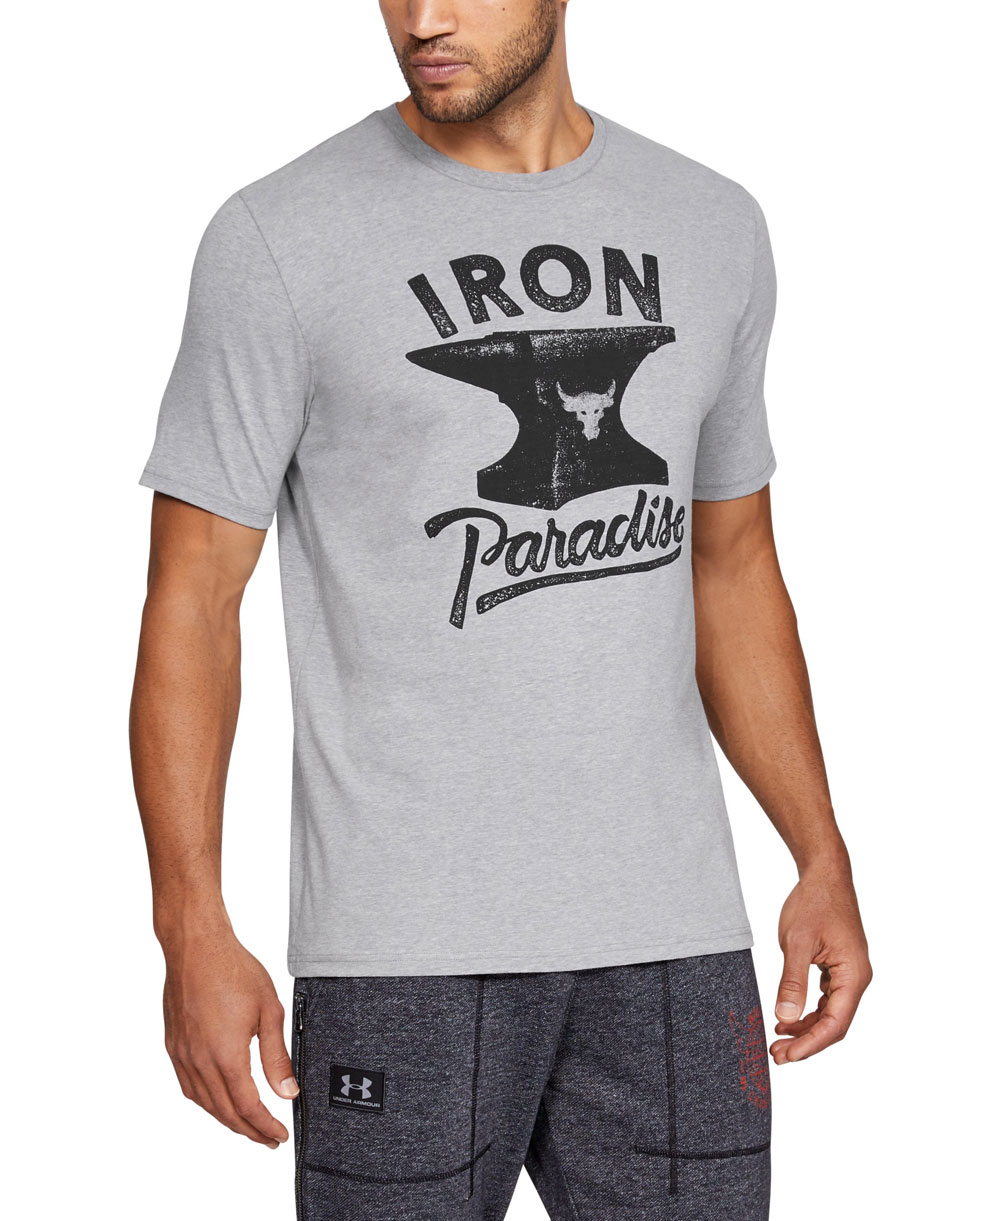 Project Rock Iron Paradise Camiseta Manga Corta para Hombre Steel Light Heather